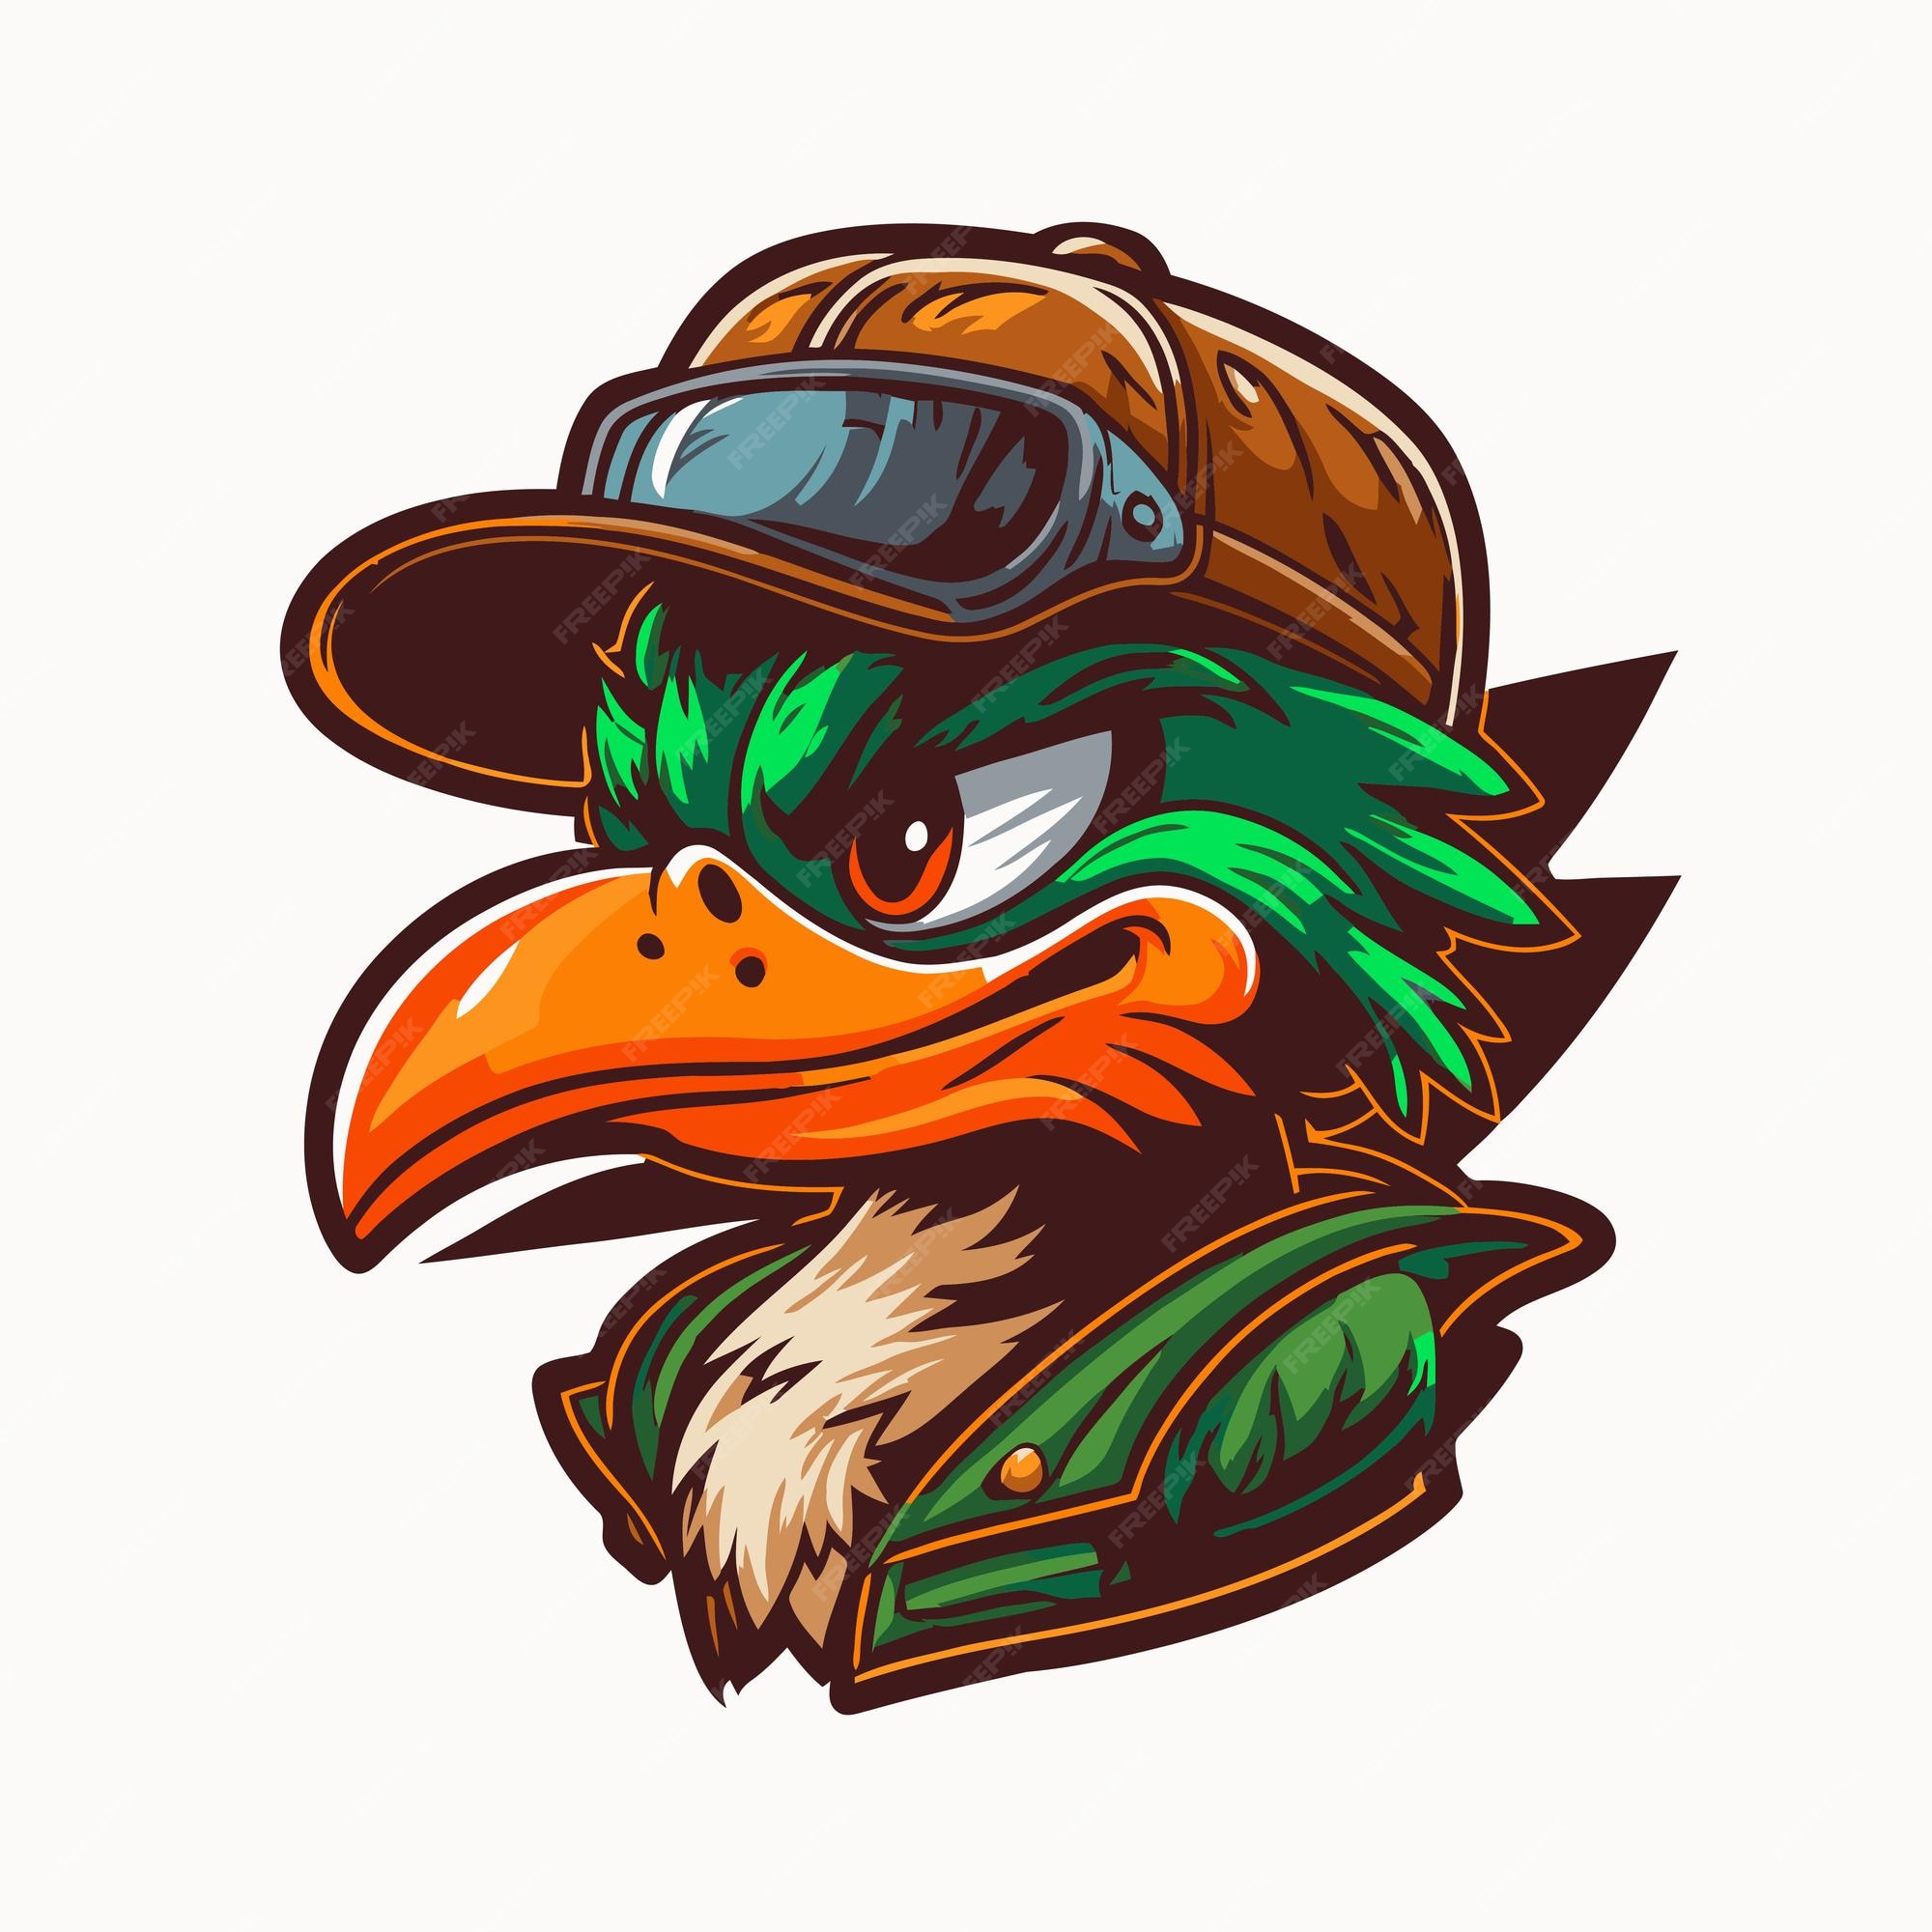 Premium Vector | Cool duck or goose character logo mascot icon for branding  in cartoon vector